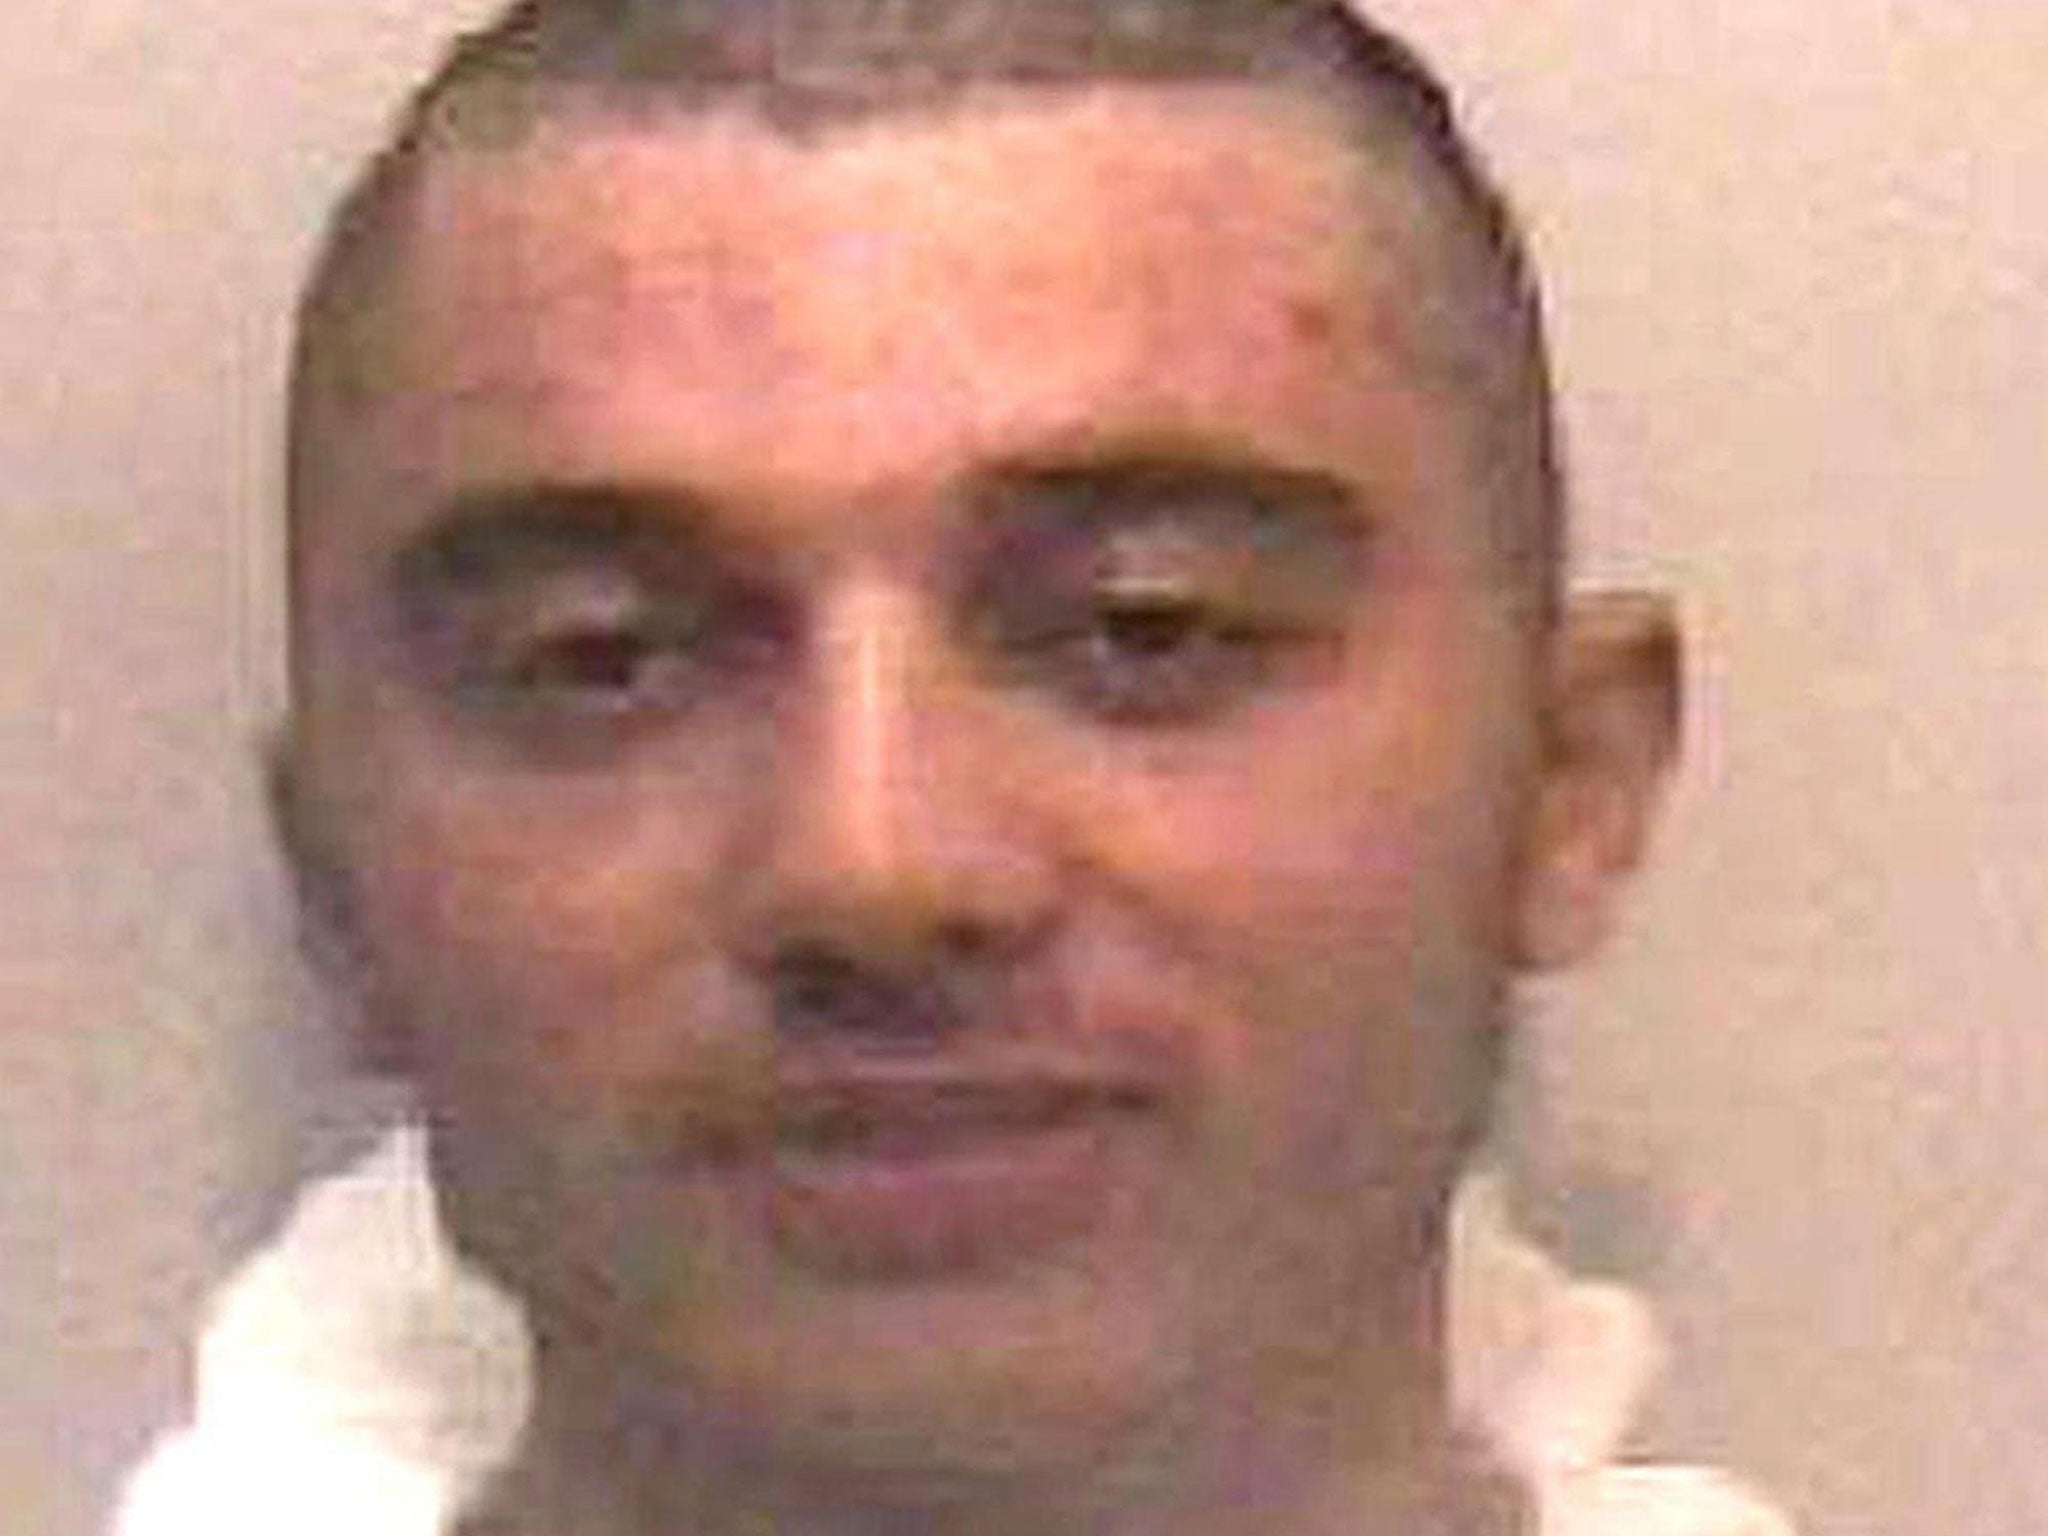 Kevan Thakrar was jailed for life in 2008 for murdering three drug dealers in Hertfordshire